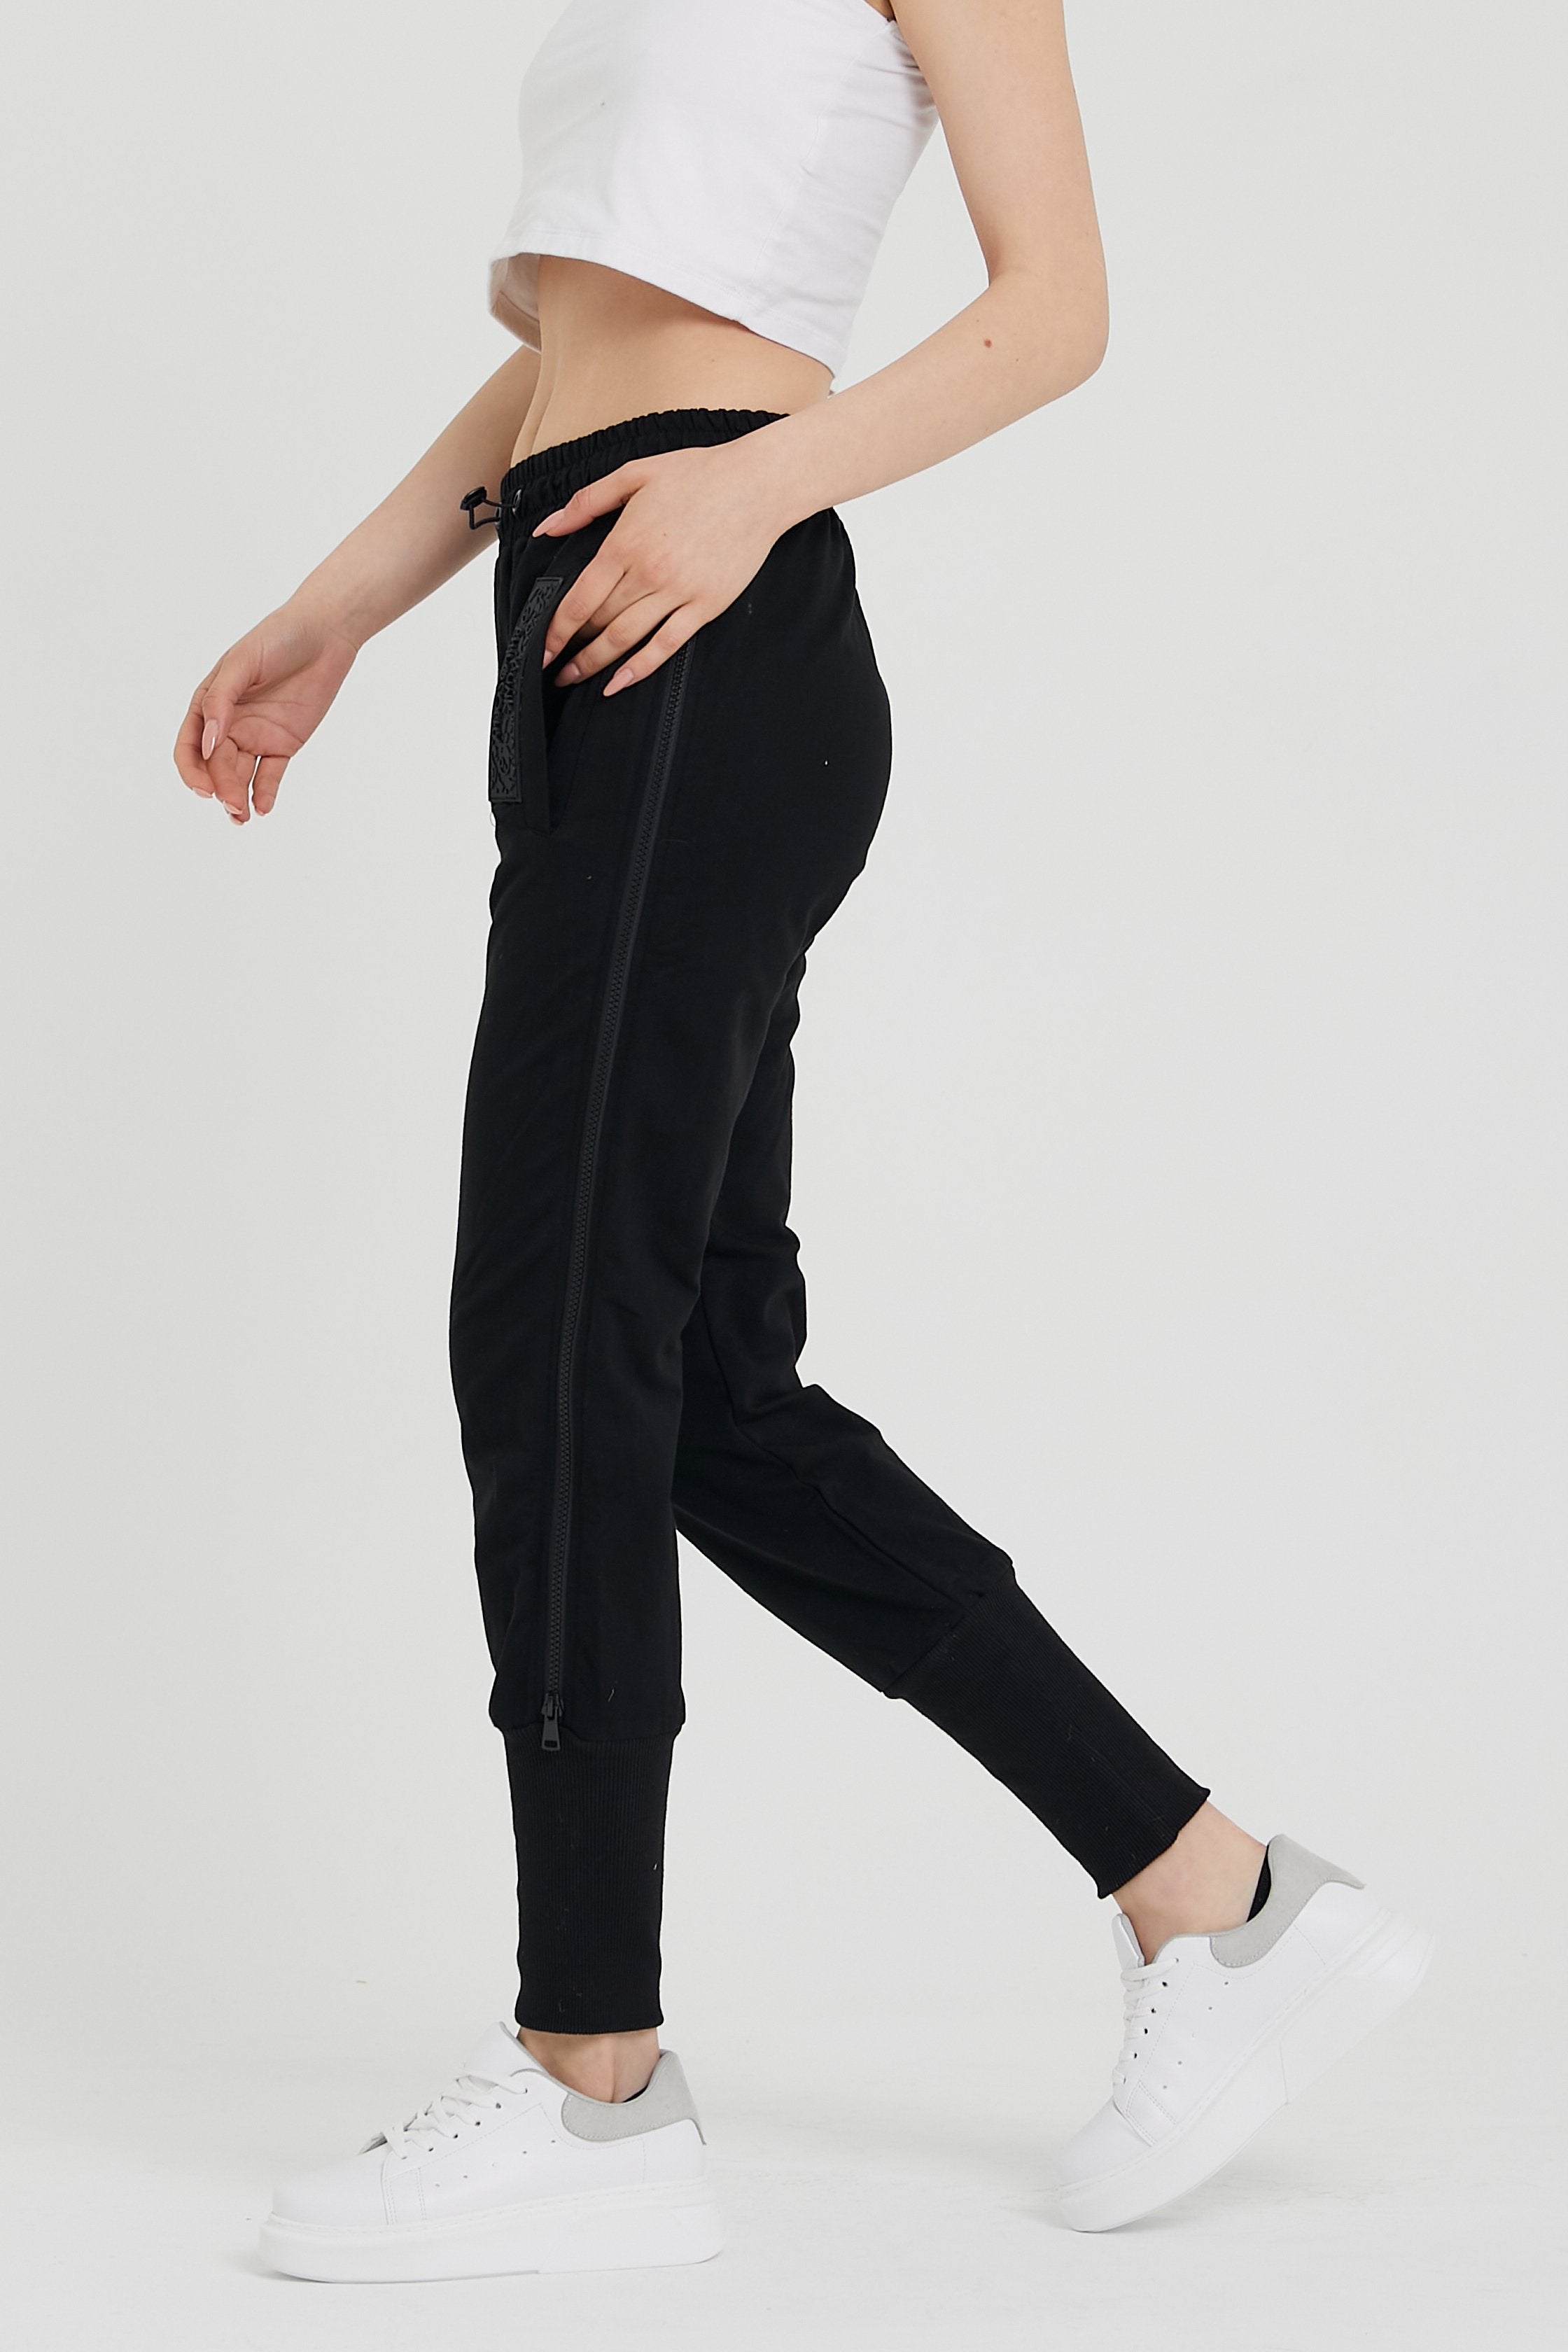 Full Side-Zipper Black Pants 4020